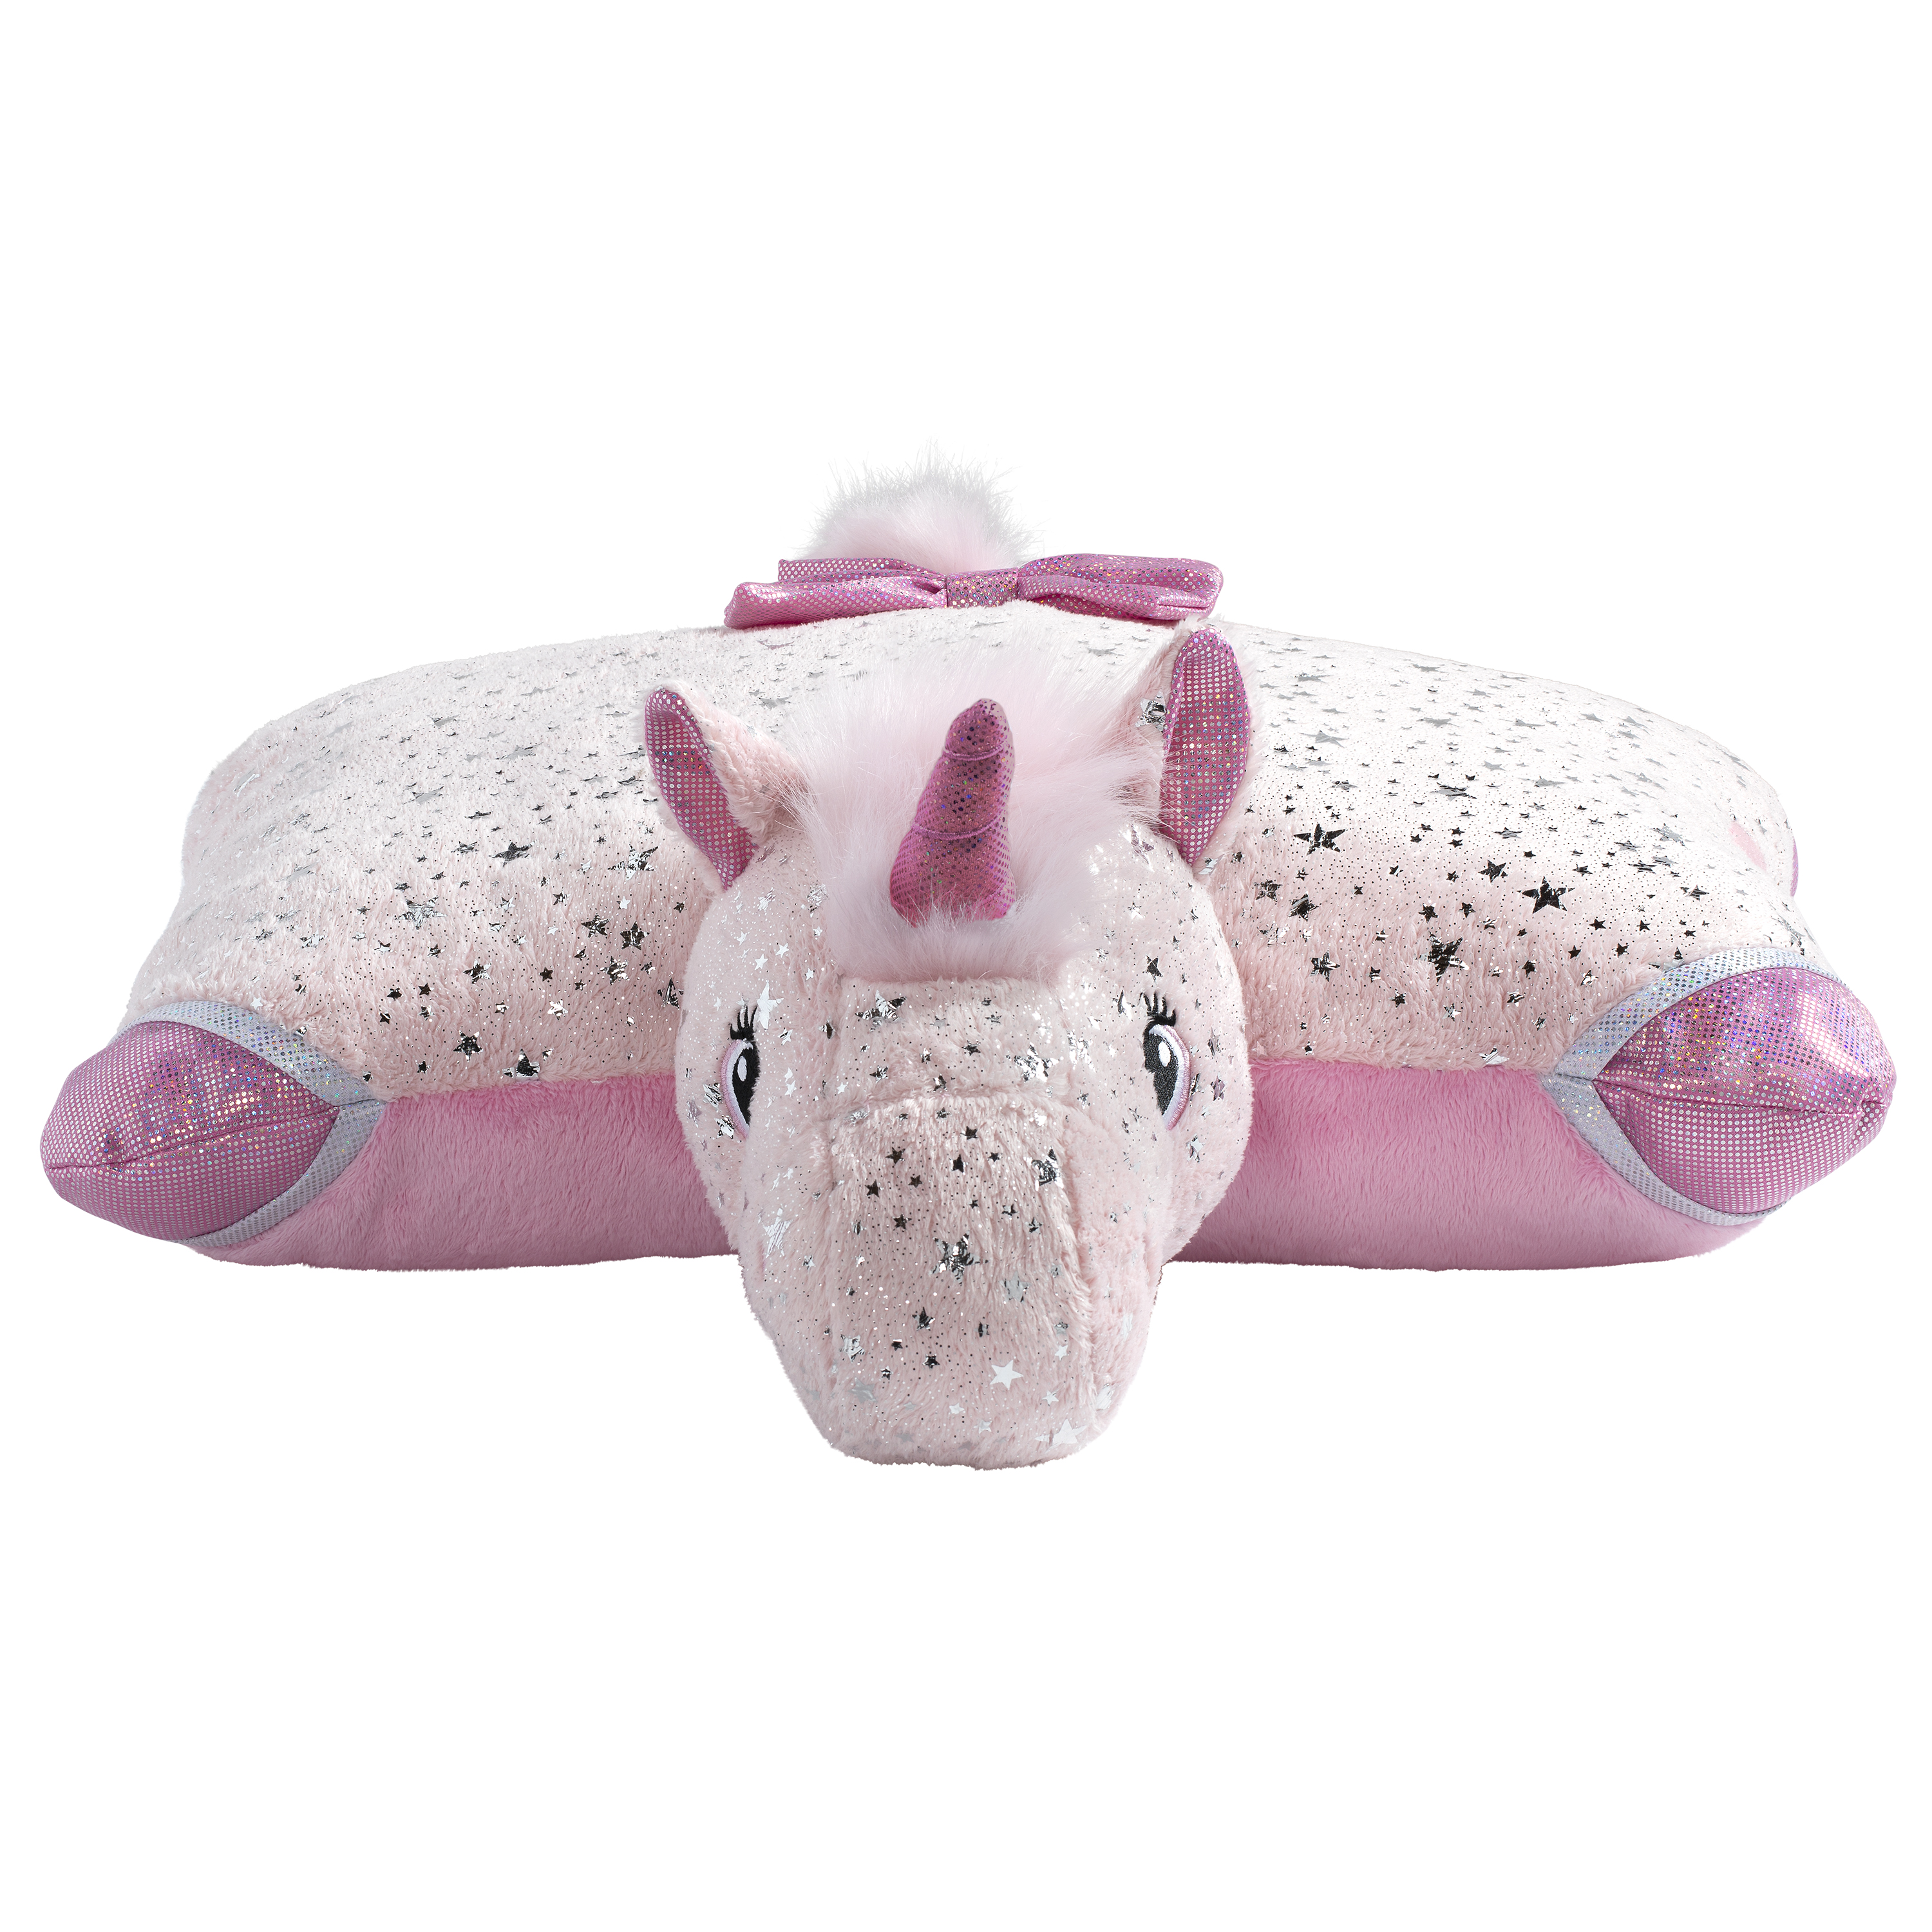 Pillow Pets Signature Sparkly Pink Unicorn Stuffed Animal Plush Toy - image 5 of 6